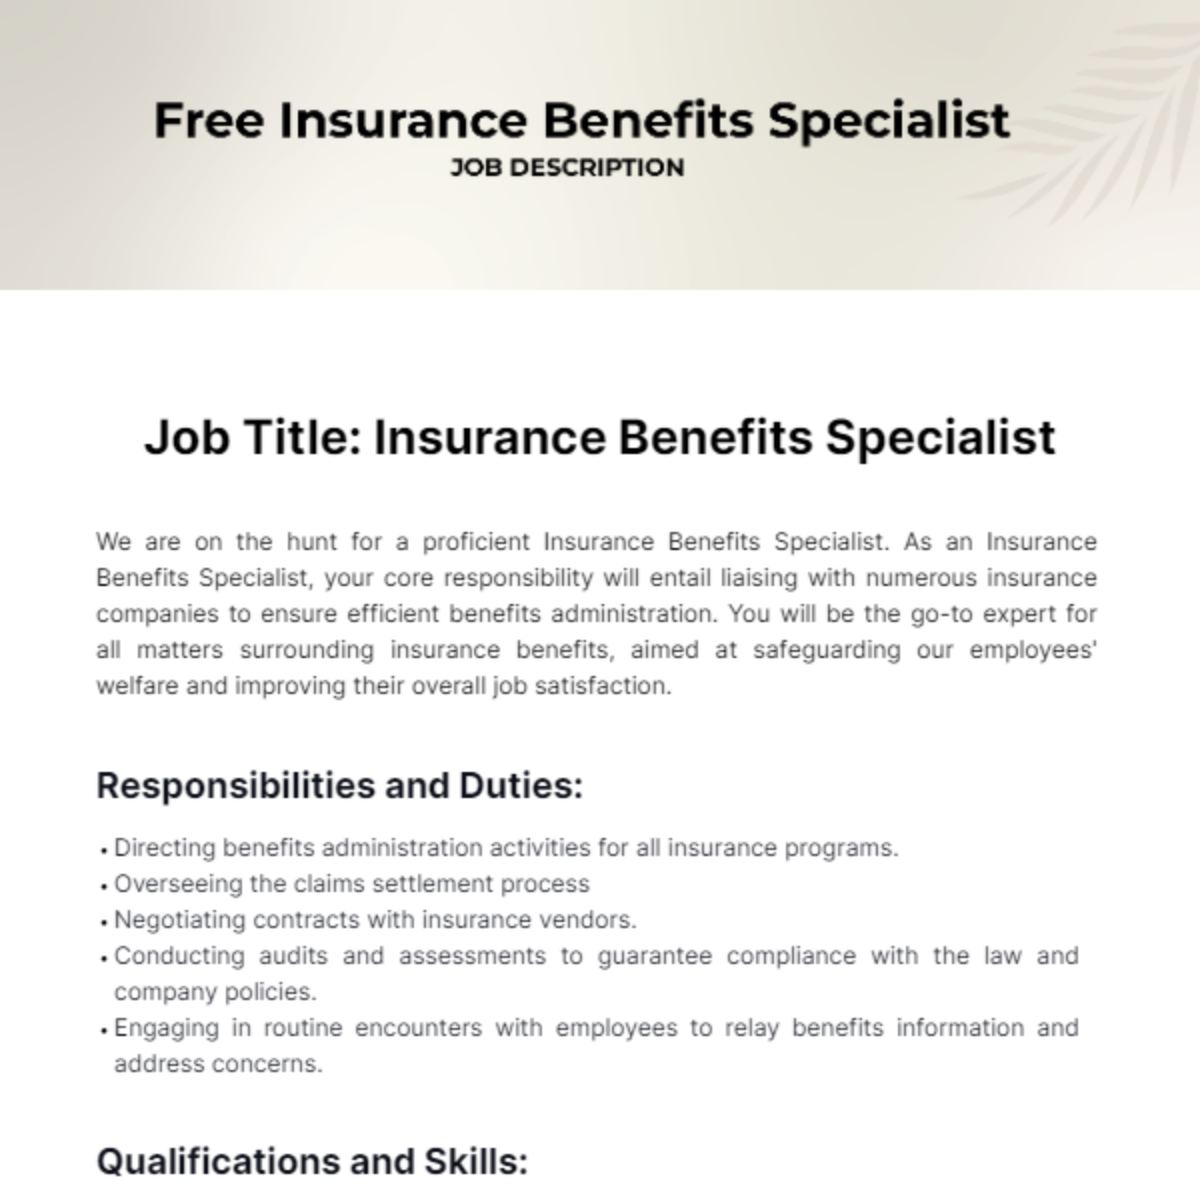 Free Insurance Benefits Specialist Job Description Template